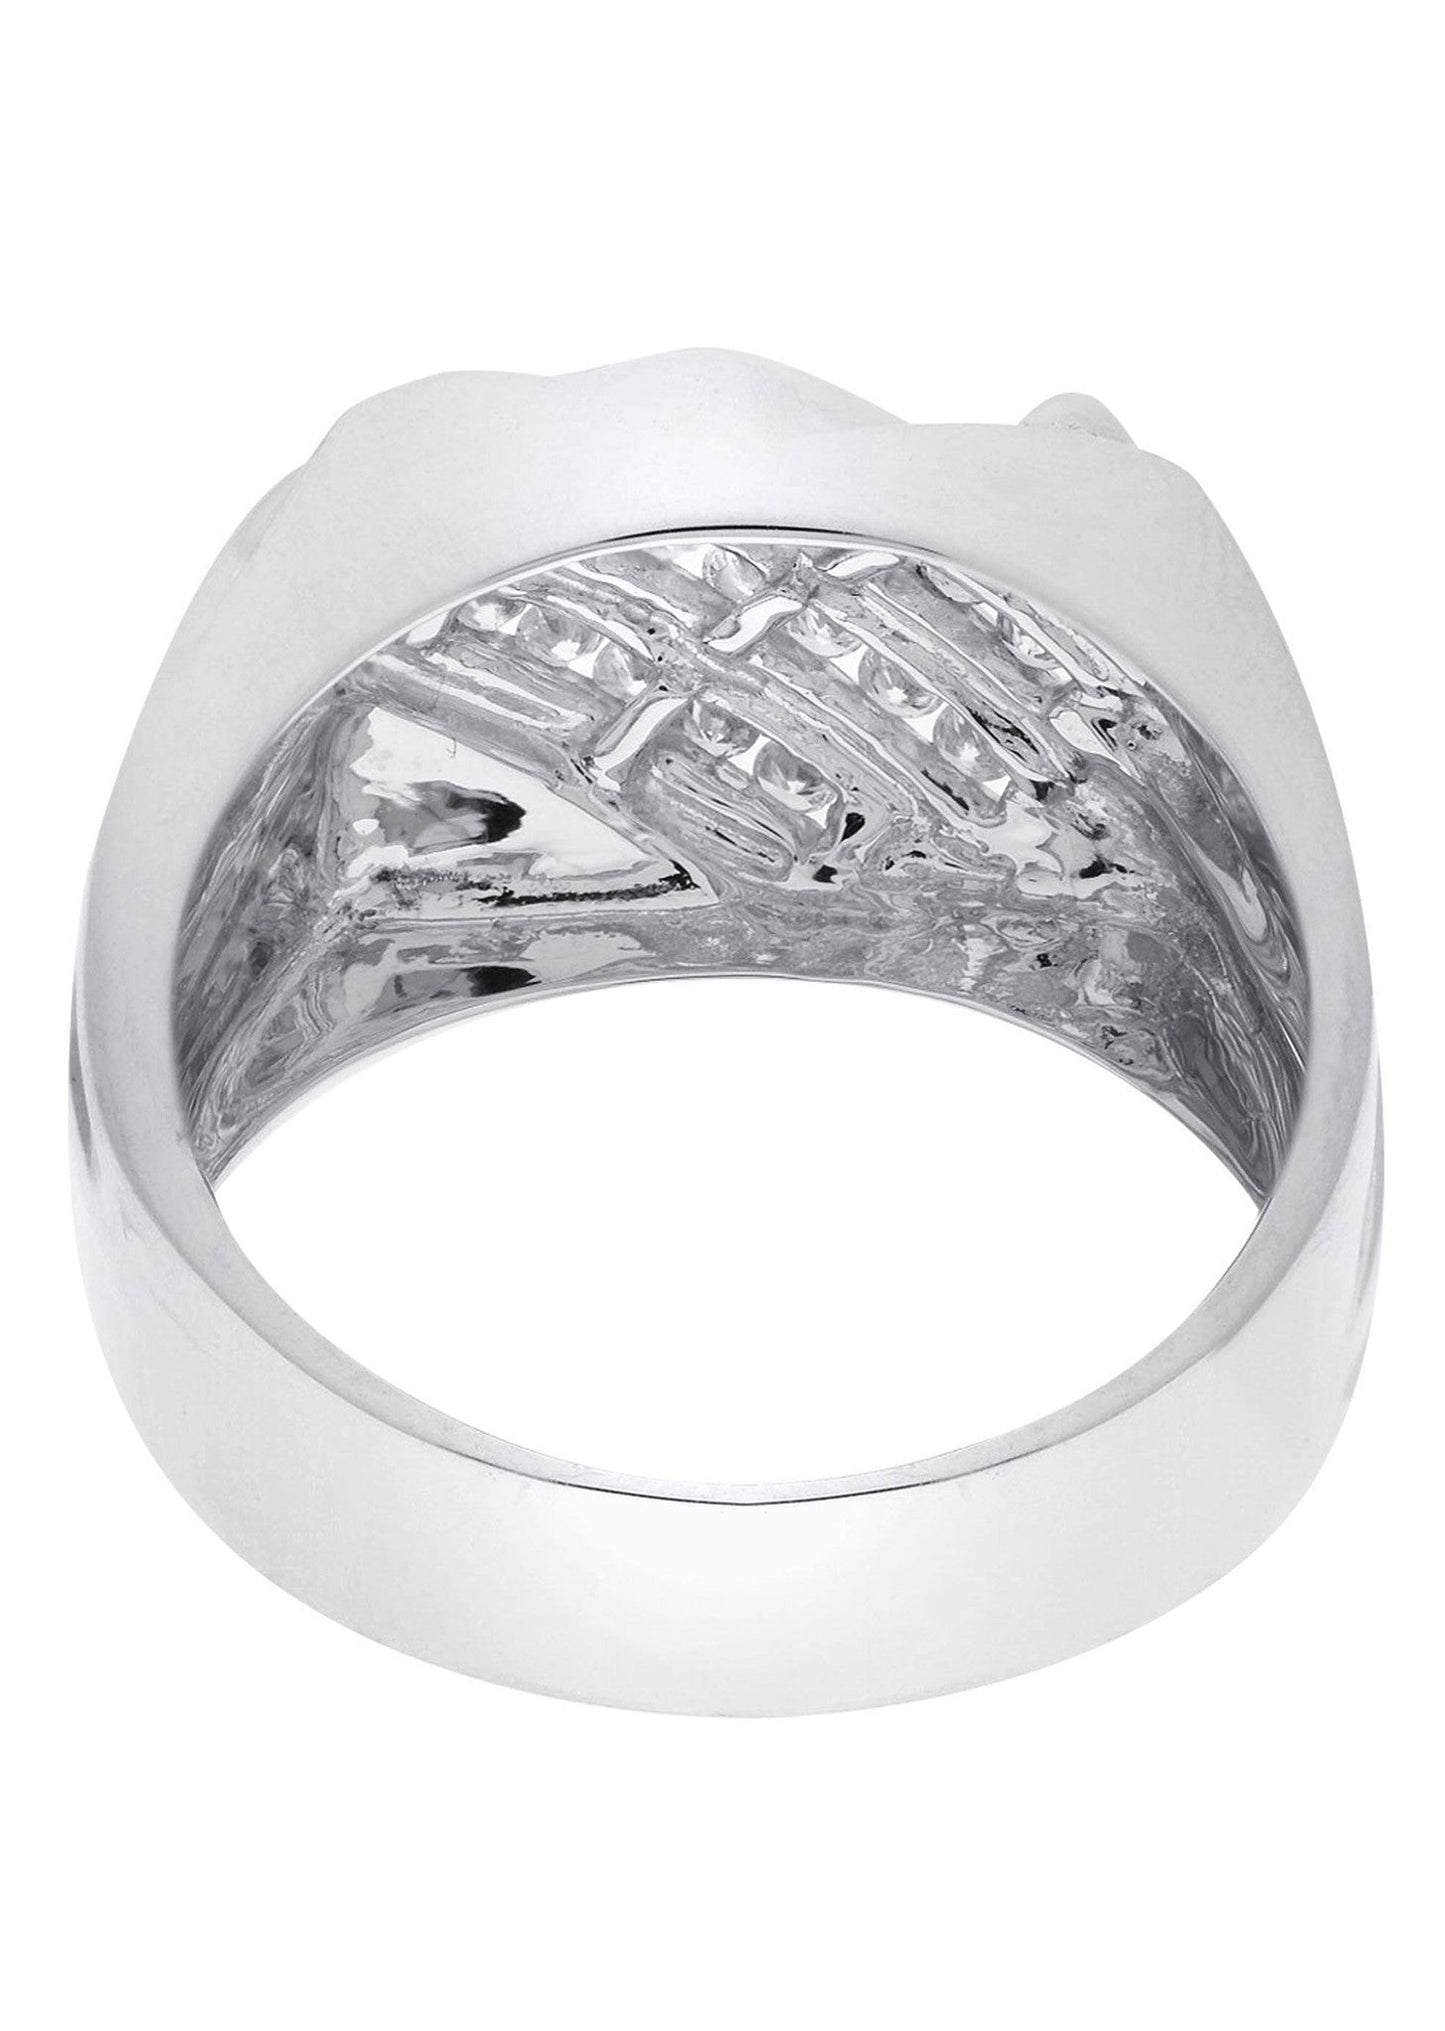 Mens Diamond Ring| 0.41 Carats| 9.81 Grams